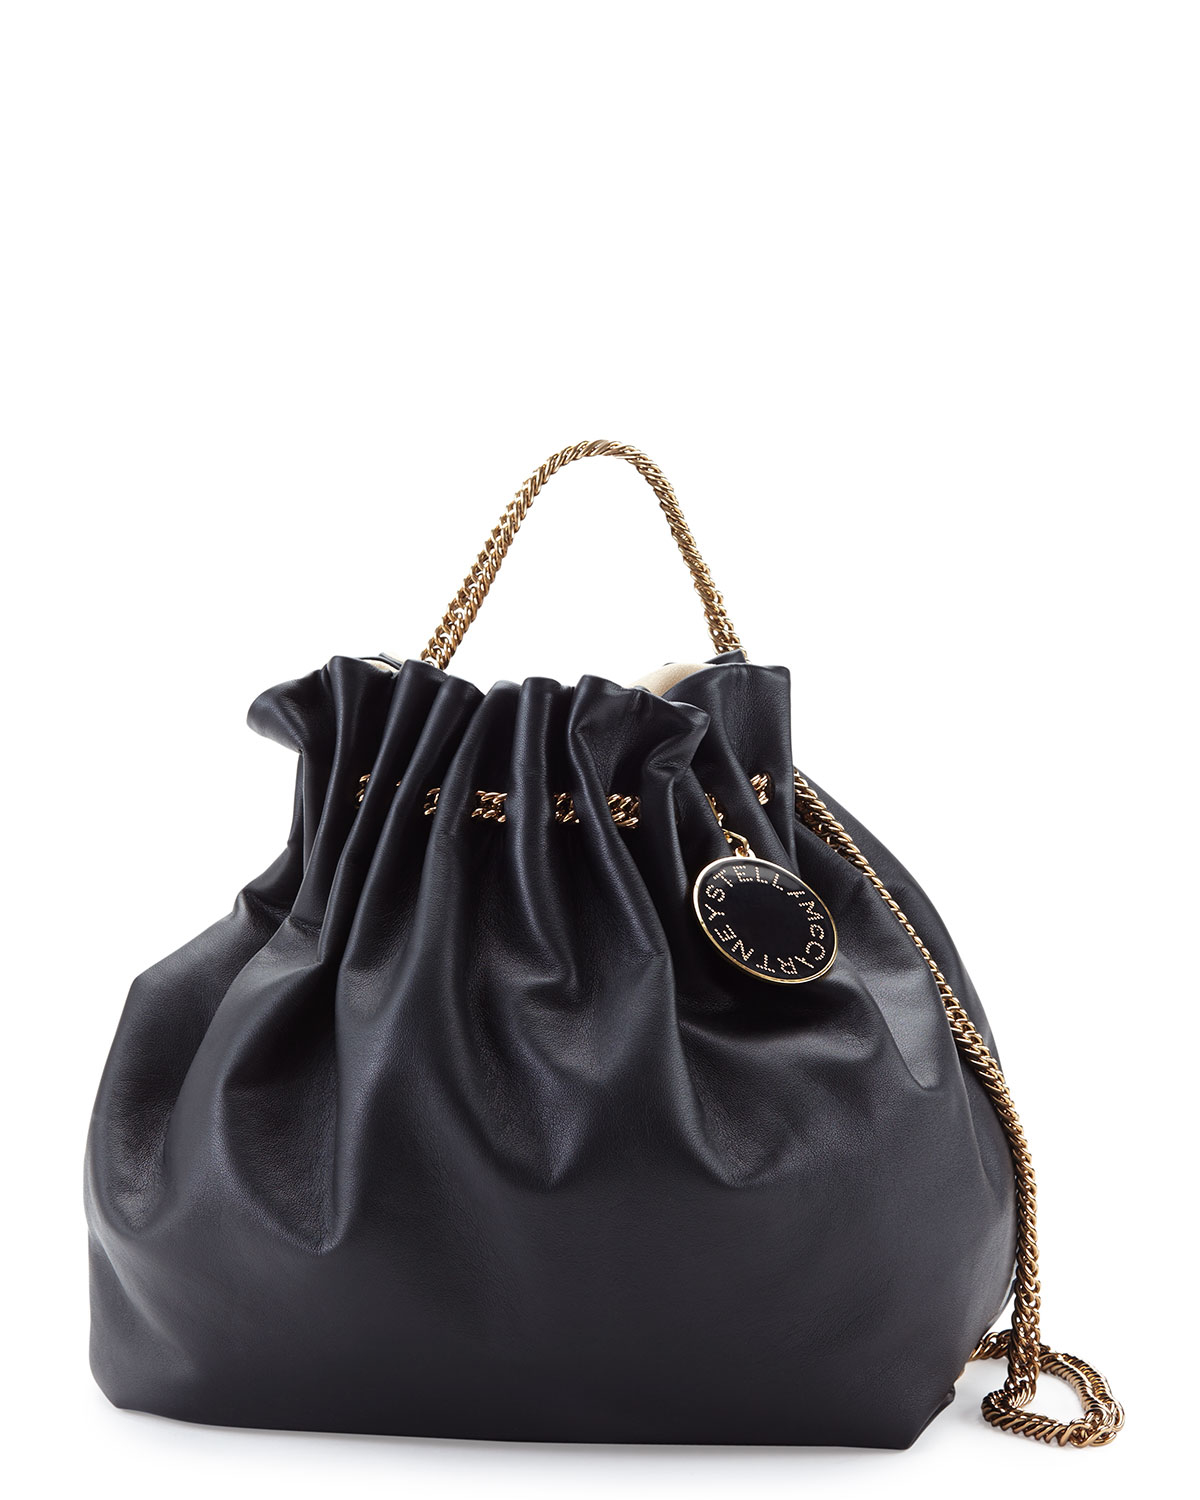 Stella mccartney Noma Chain-Strap Hobo Bag in Black | Lyst